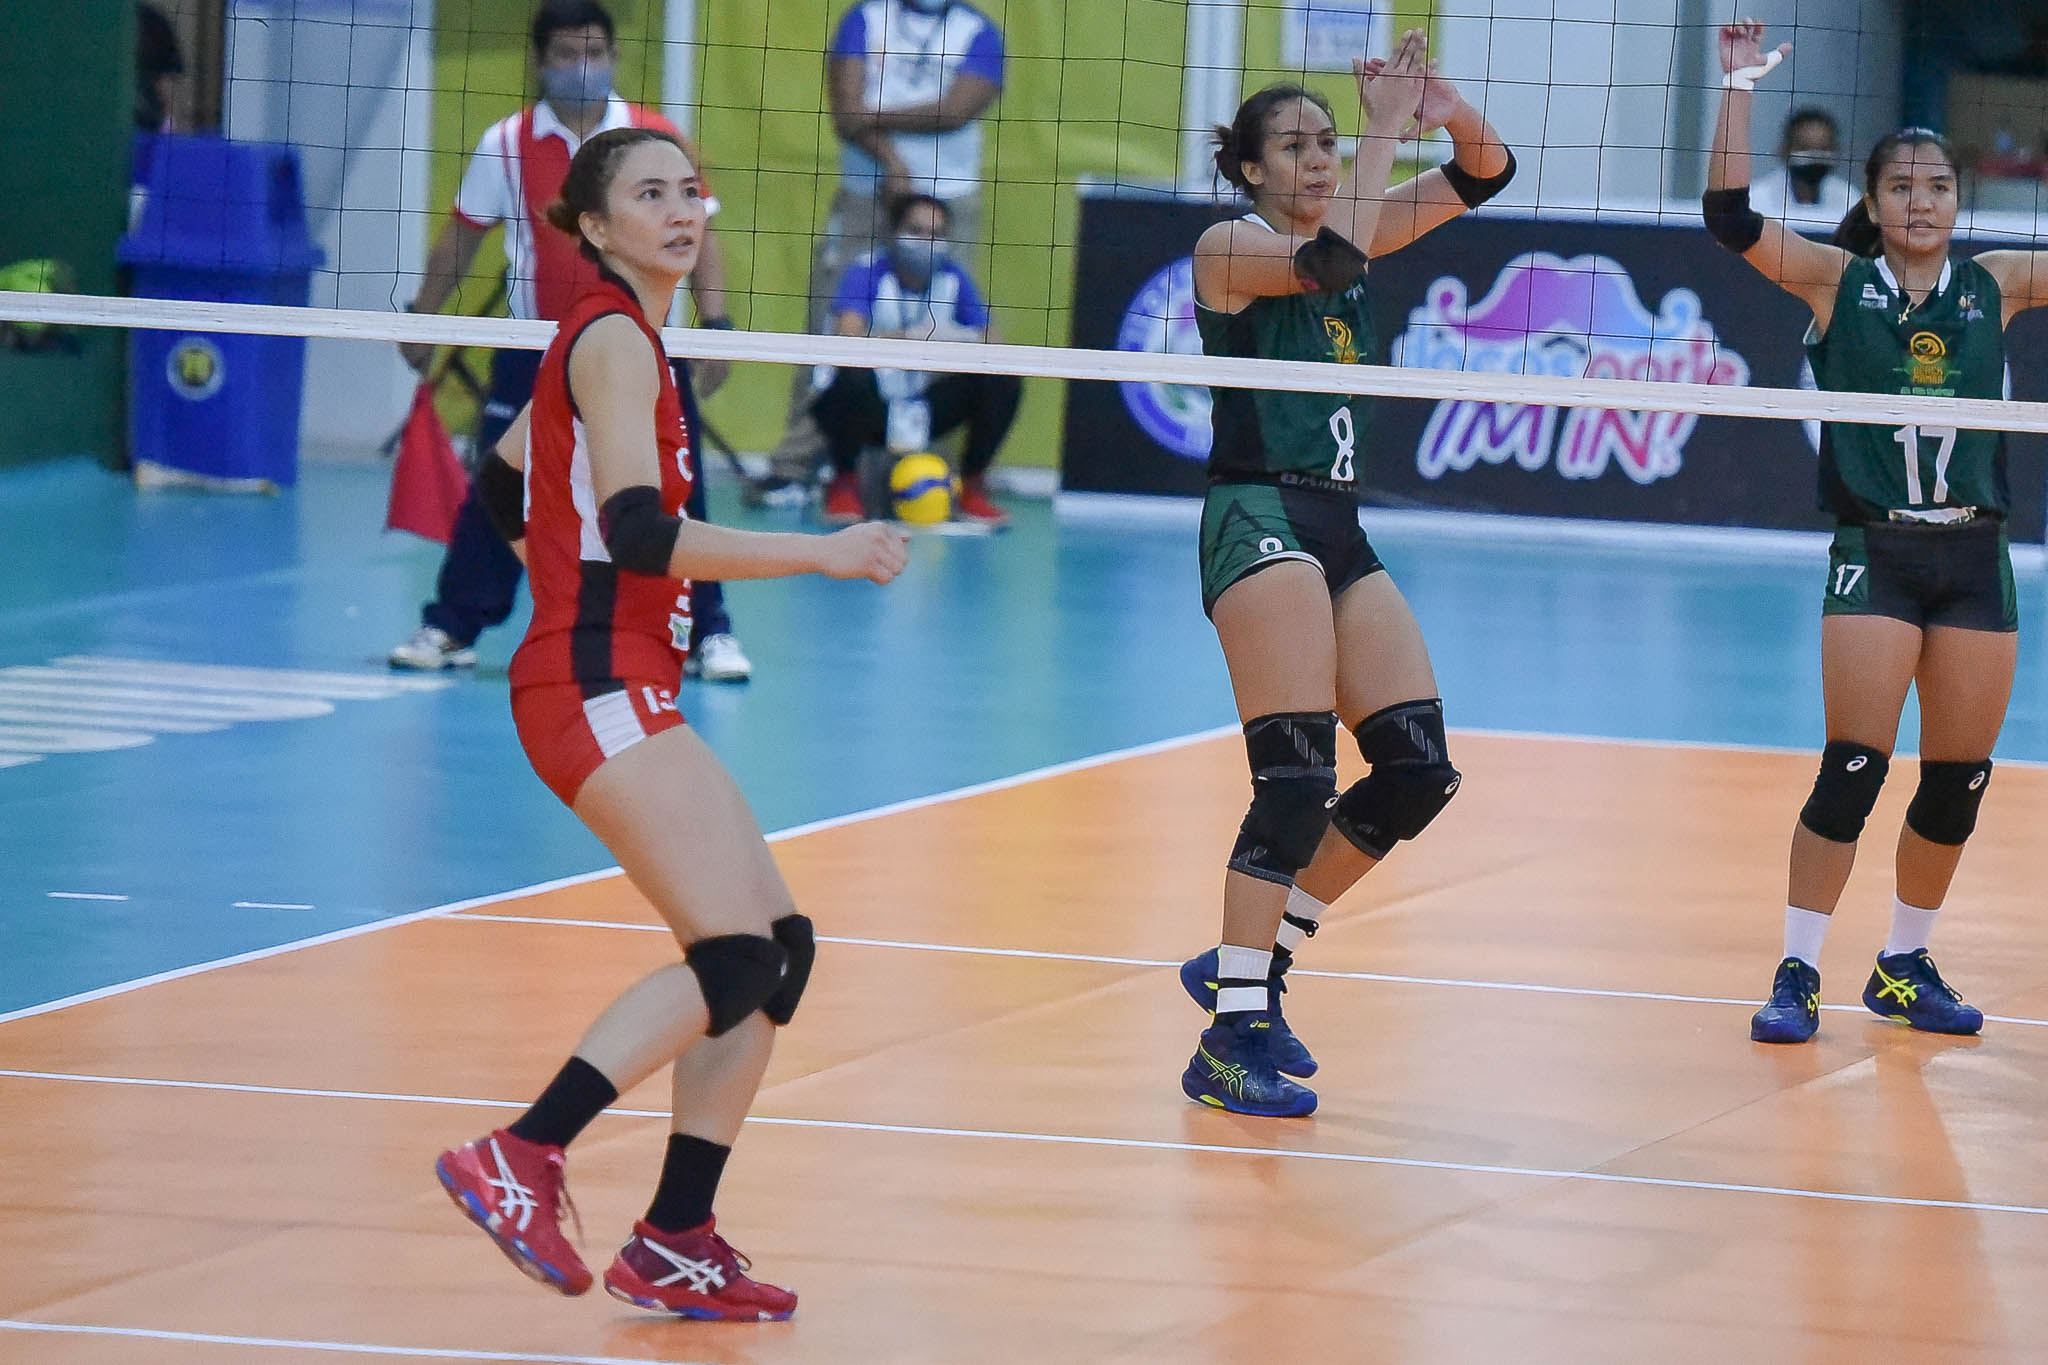 2021-PVL-Open-Army-vs.-Cignal-Rachel-Daquis-Jovelyn-Gonzaga-1583 Jovelyn Gonzaga reunites with Rachel Daquis, comes back home to Cignal News PVL Volleyball  - philippine sports news